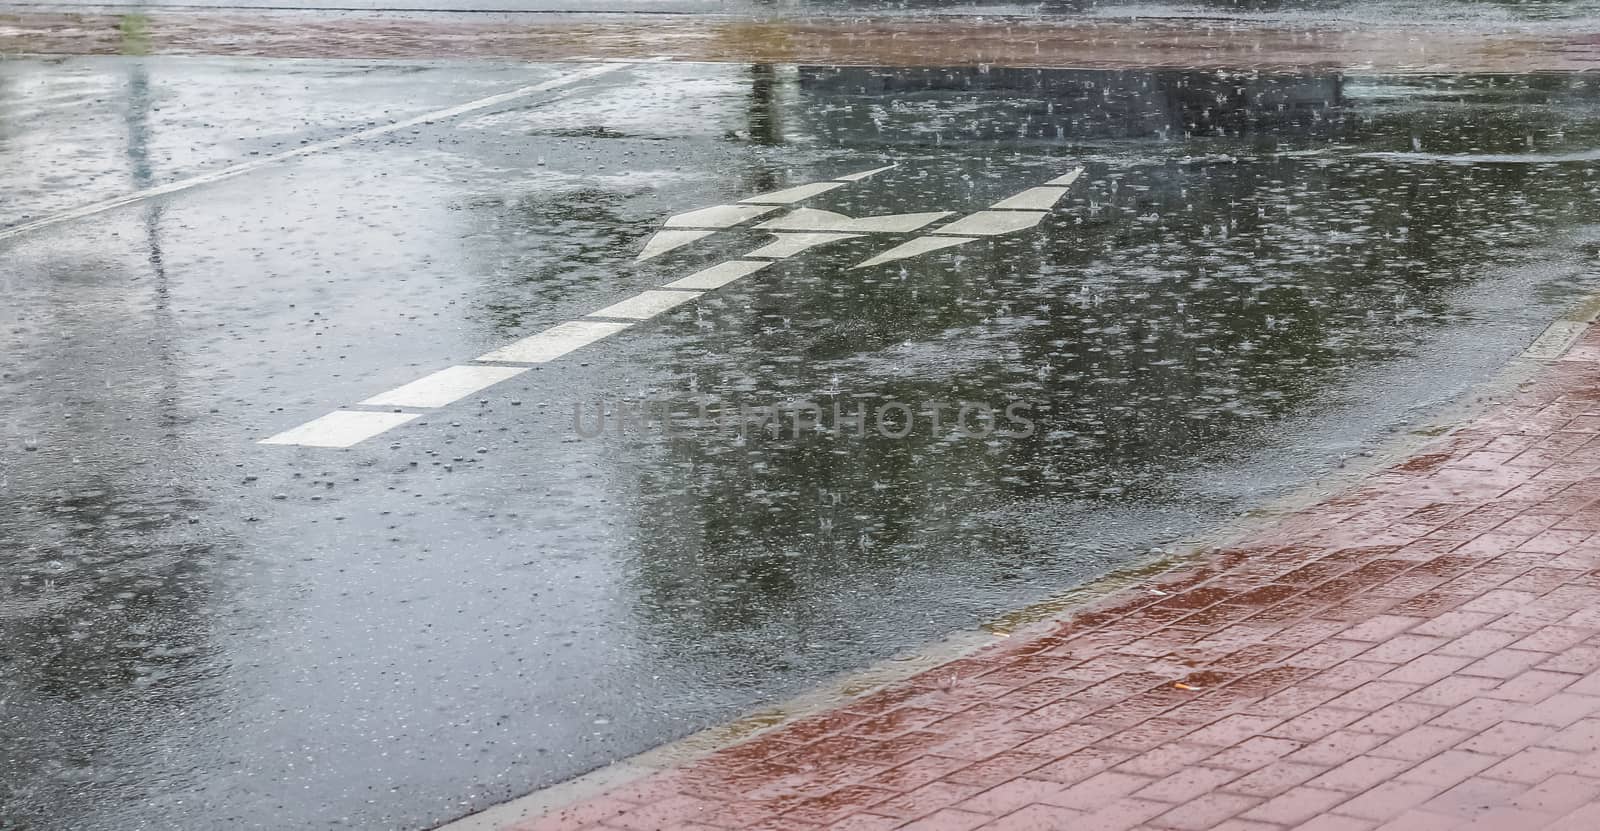 Heavy rain drops falling on city street during downpour. Wet ashpalt road texture.